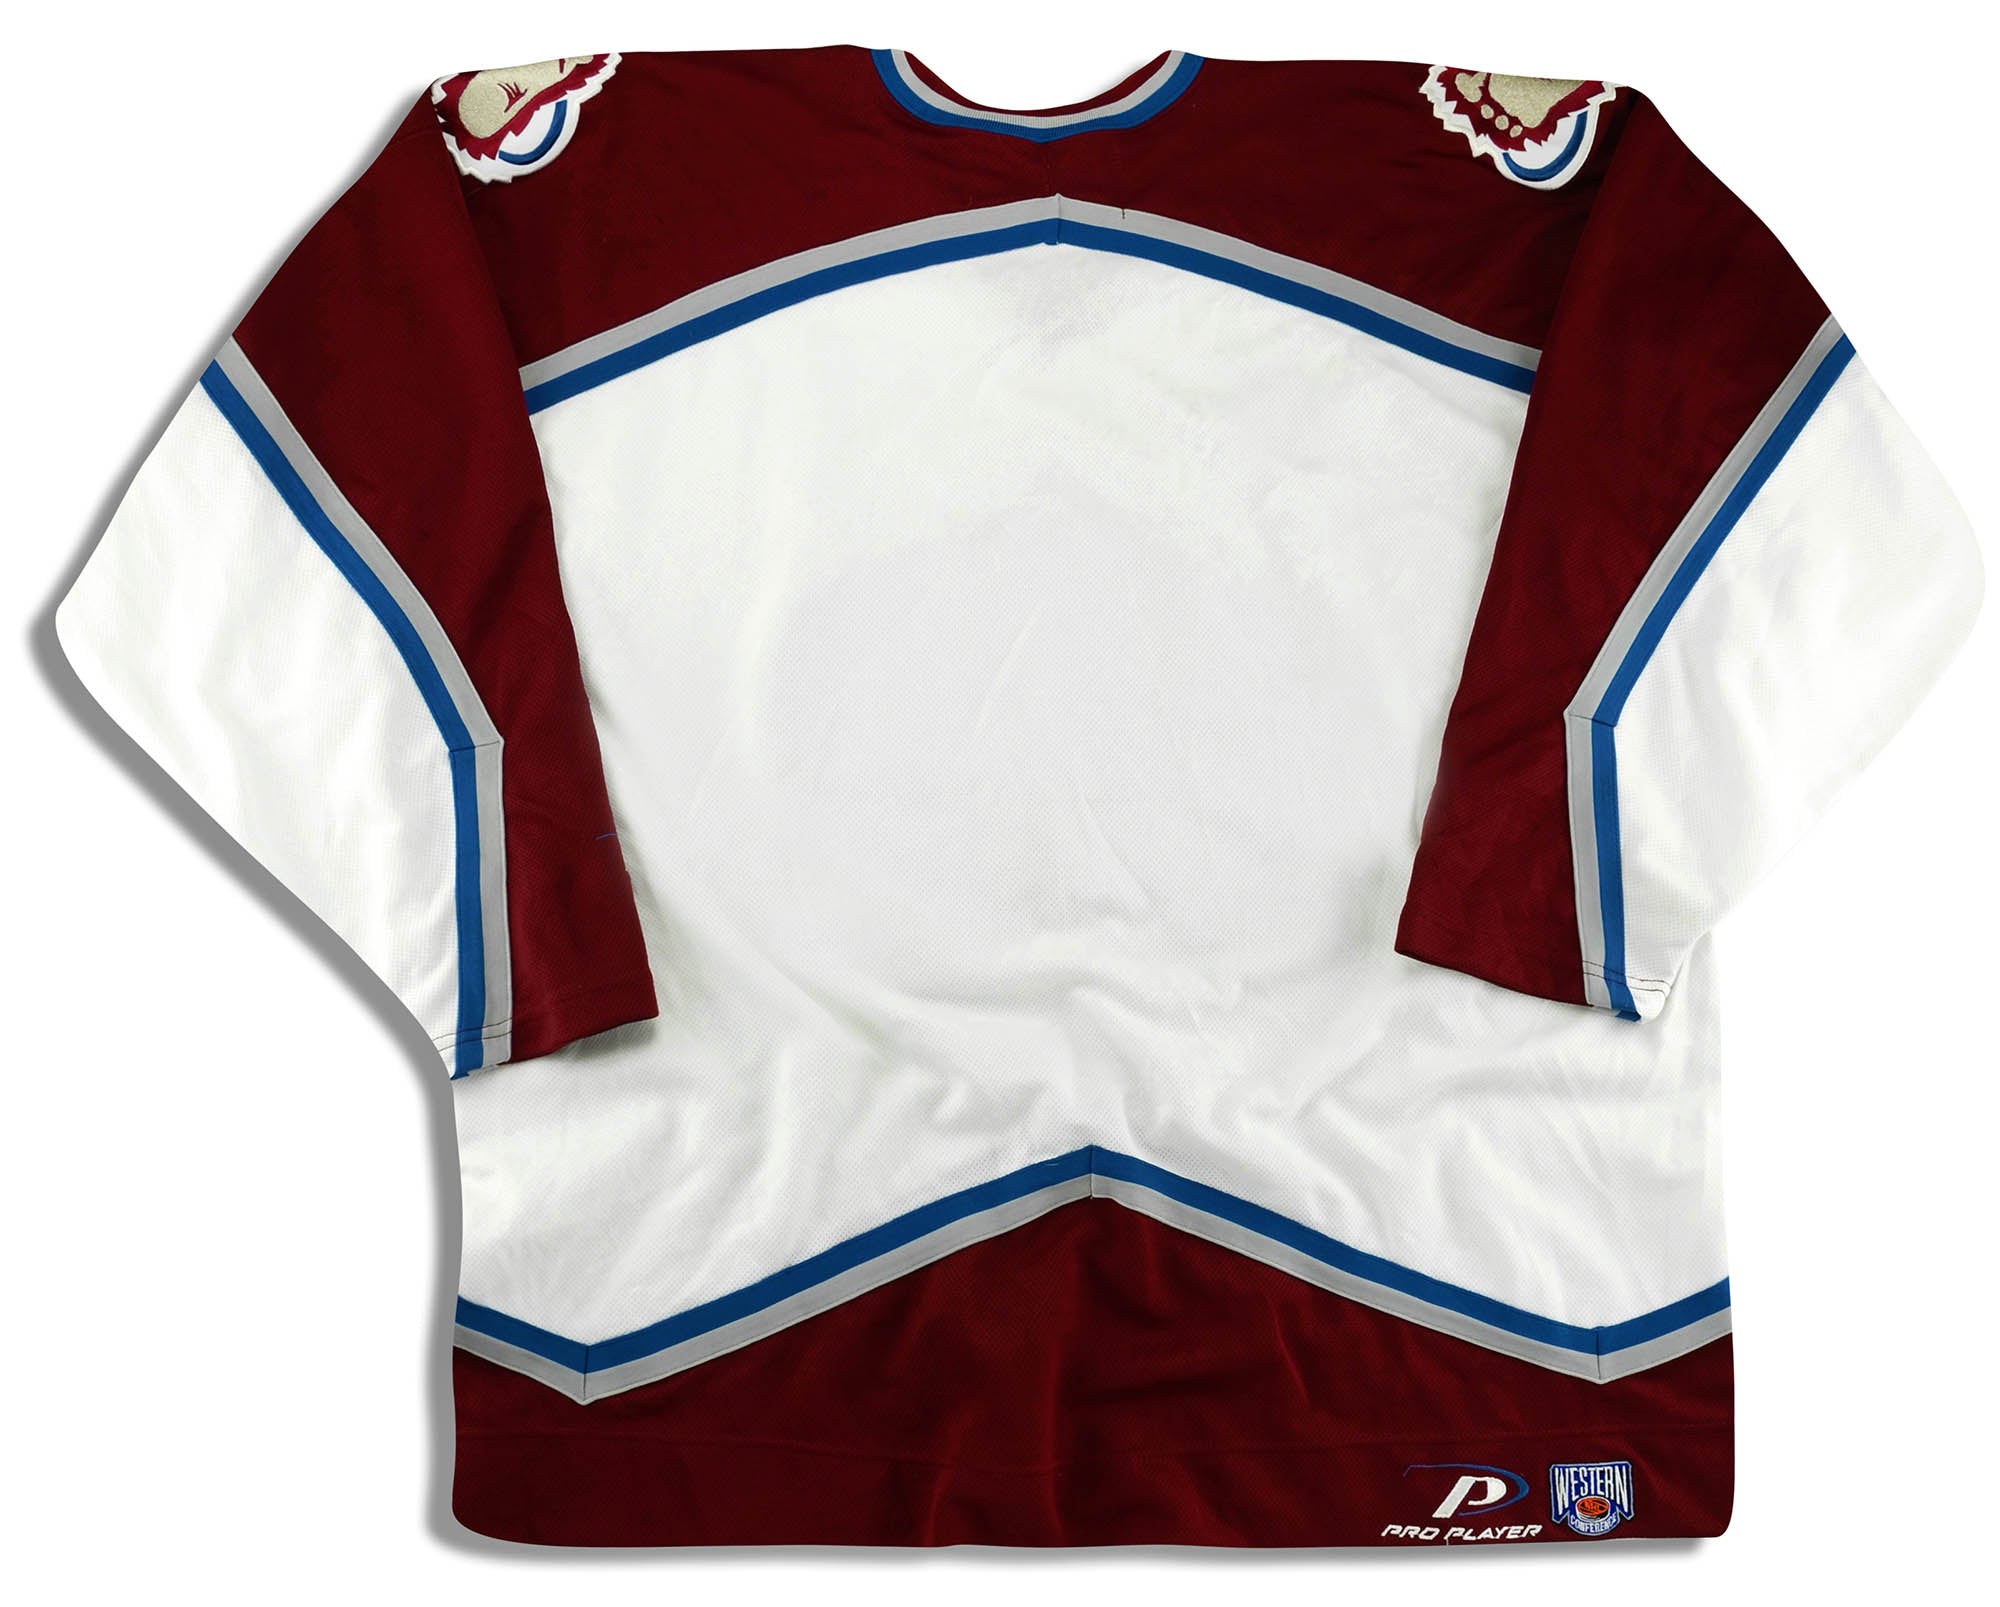 Avalanche player-worn jersey